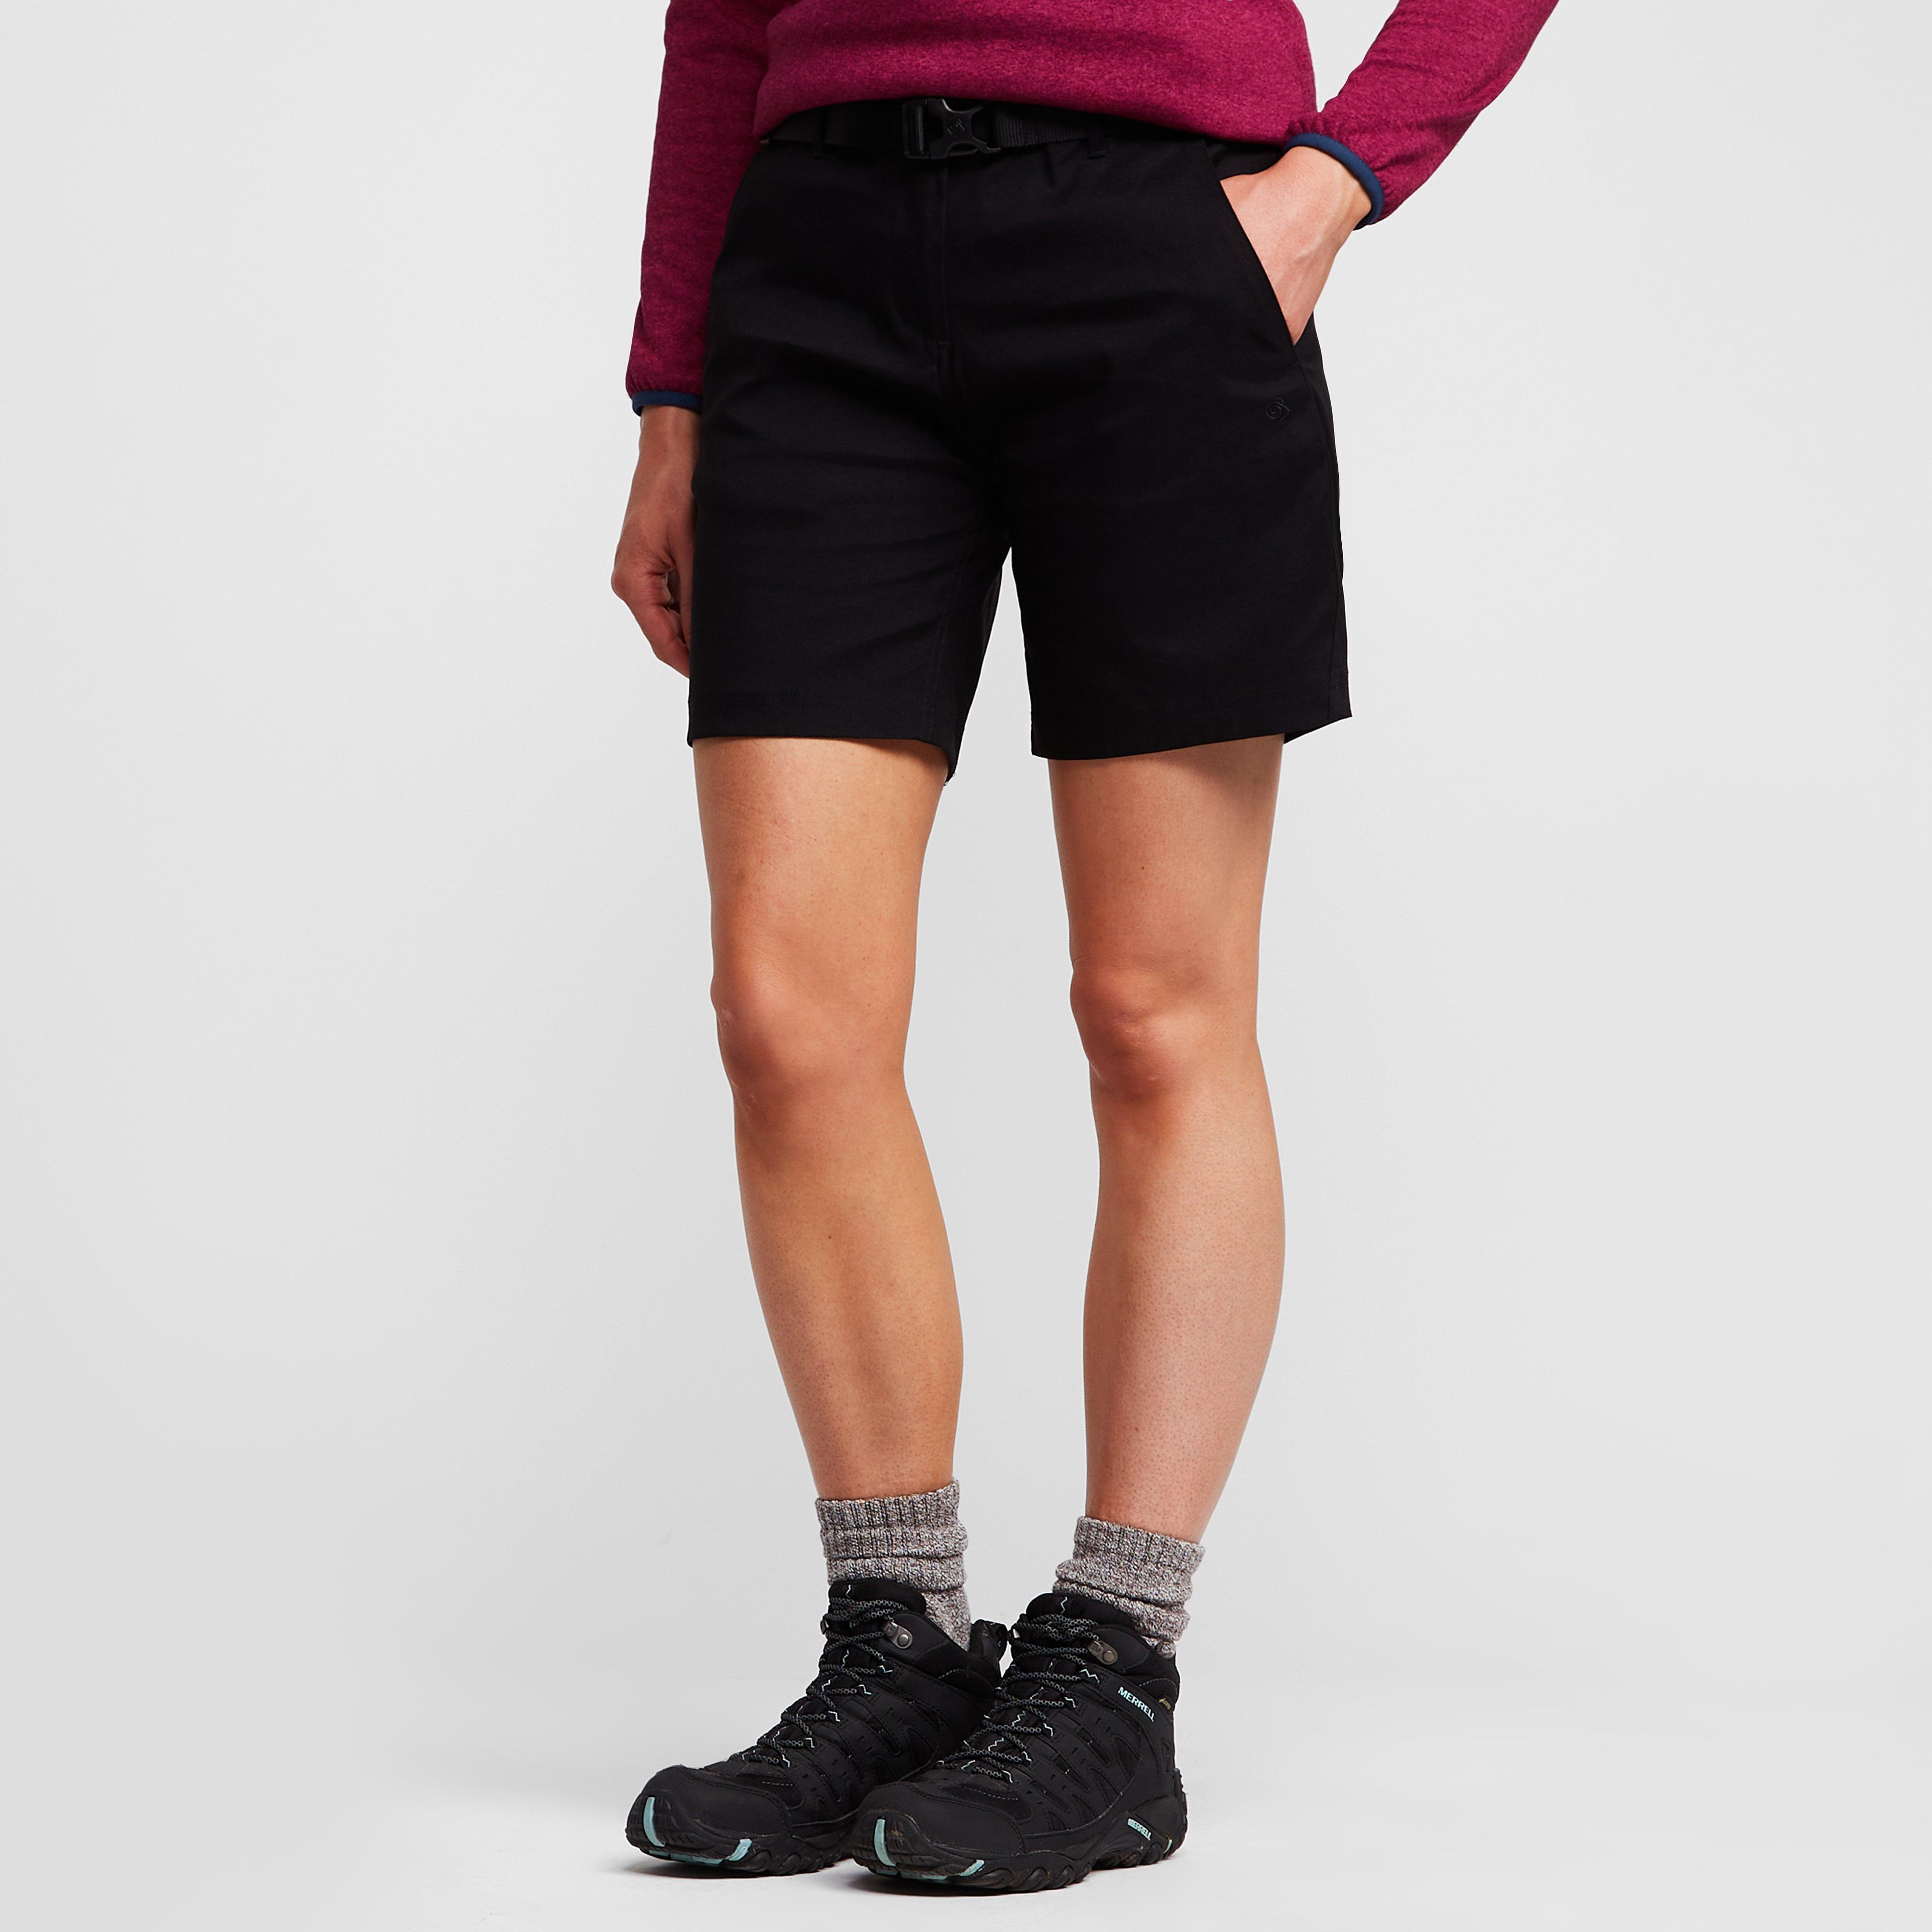 Craghoppers Women's Kiwi Pro Eco Shorts, Black